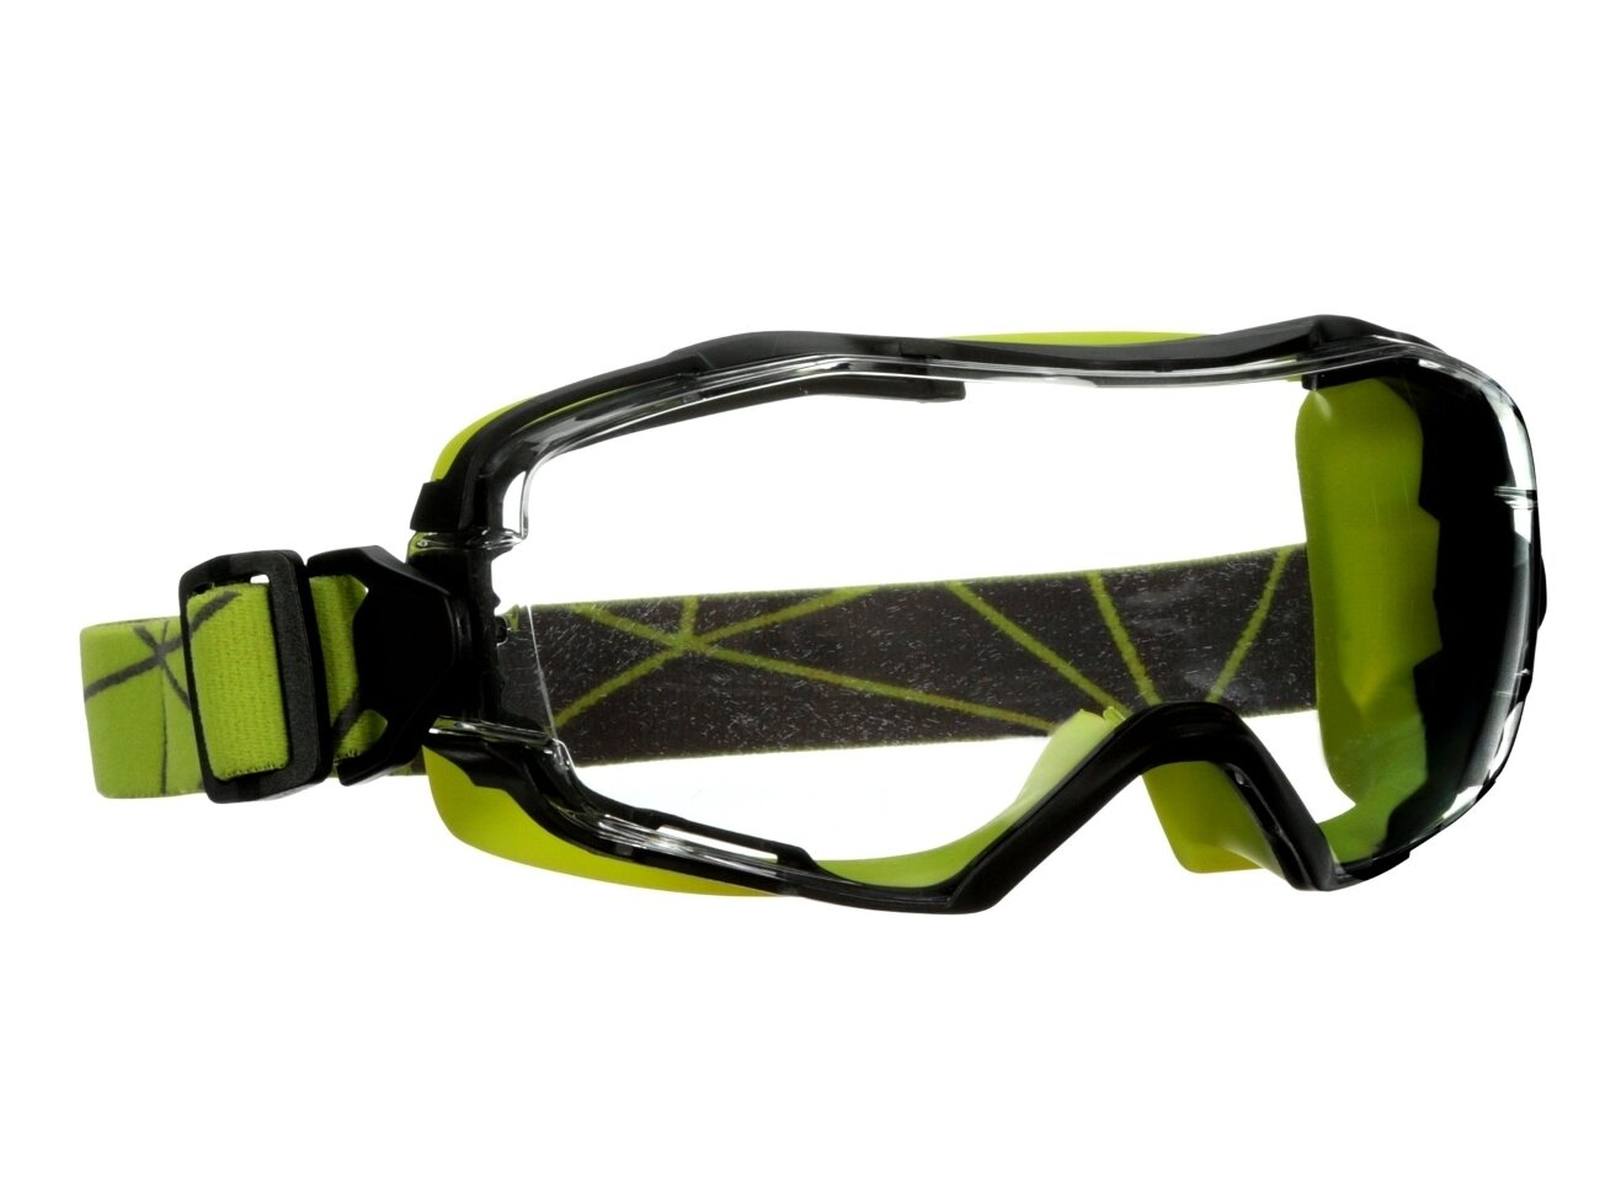 3M Gafas de visión total GoggleGear 6000, montura verde lima, revestimiento antivaho/antirayaduras Scotchgard (K&amp;N), lente transparente, GG6001SGAF-GRN-EU